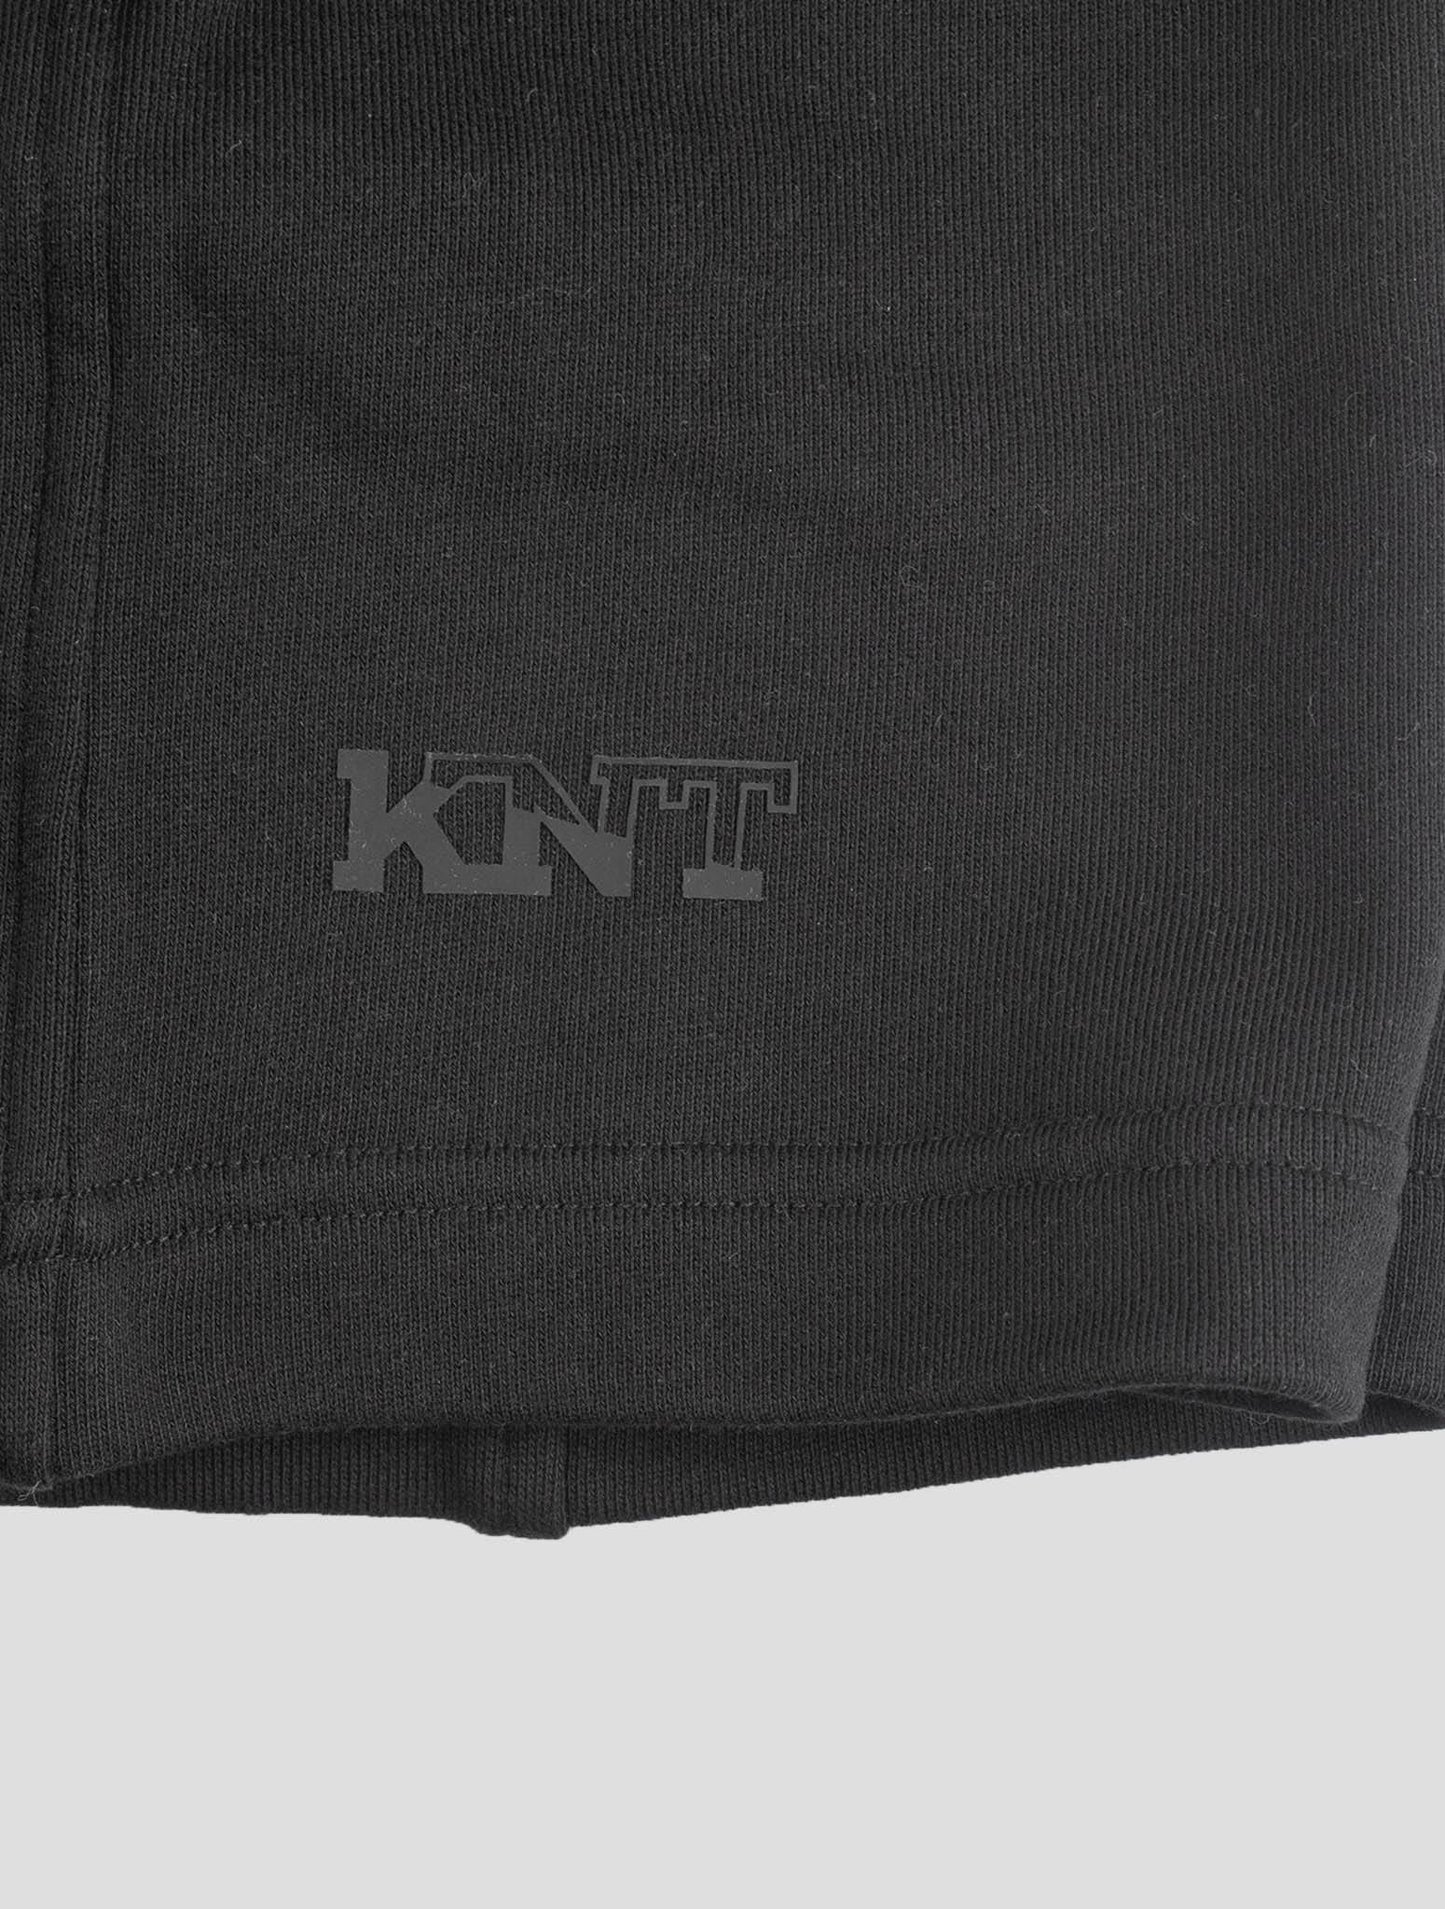 KNT Kiton سروال قصير من القطن الأسود